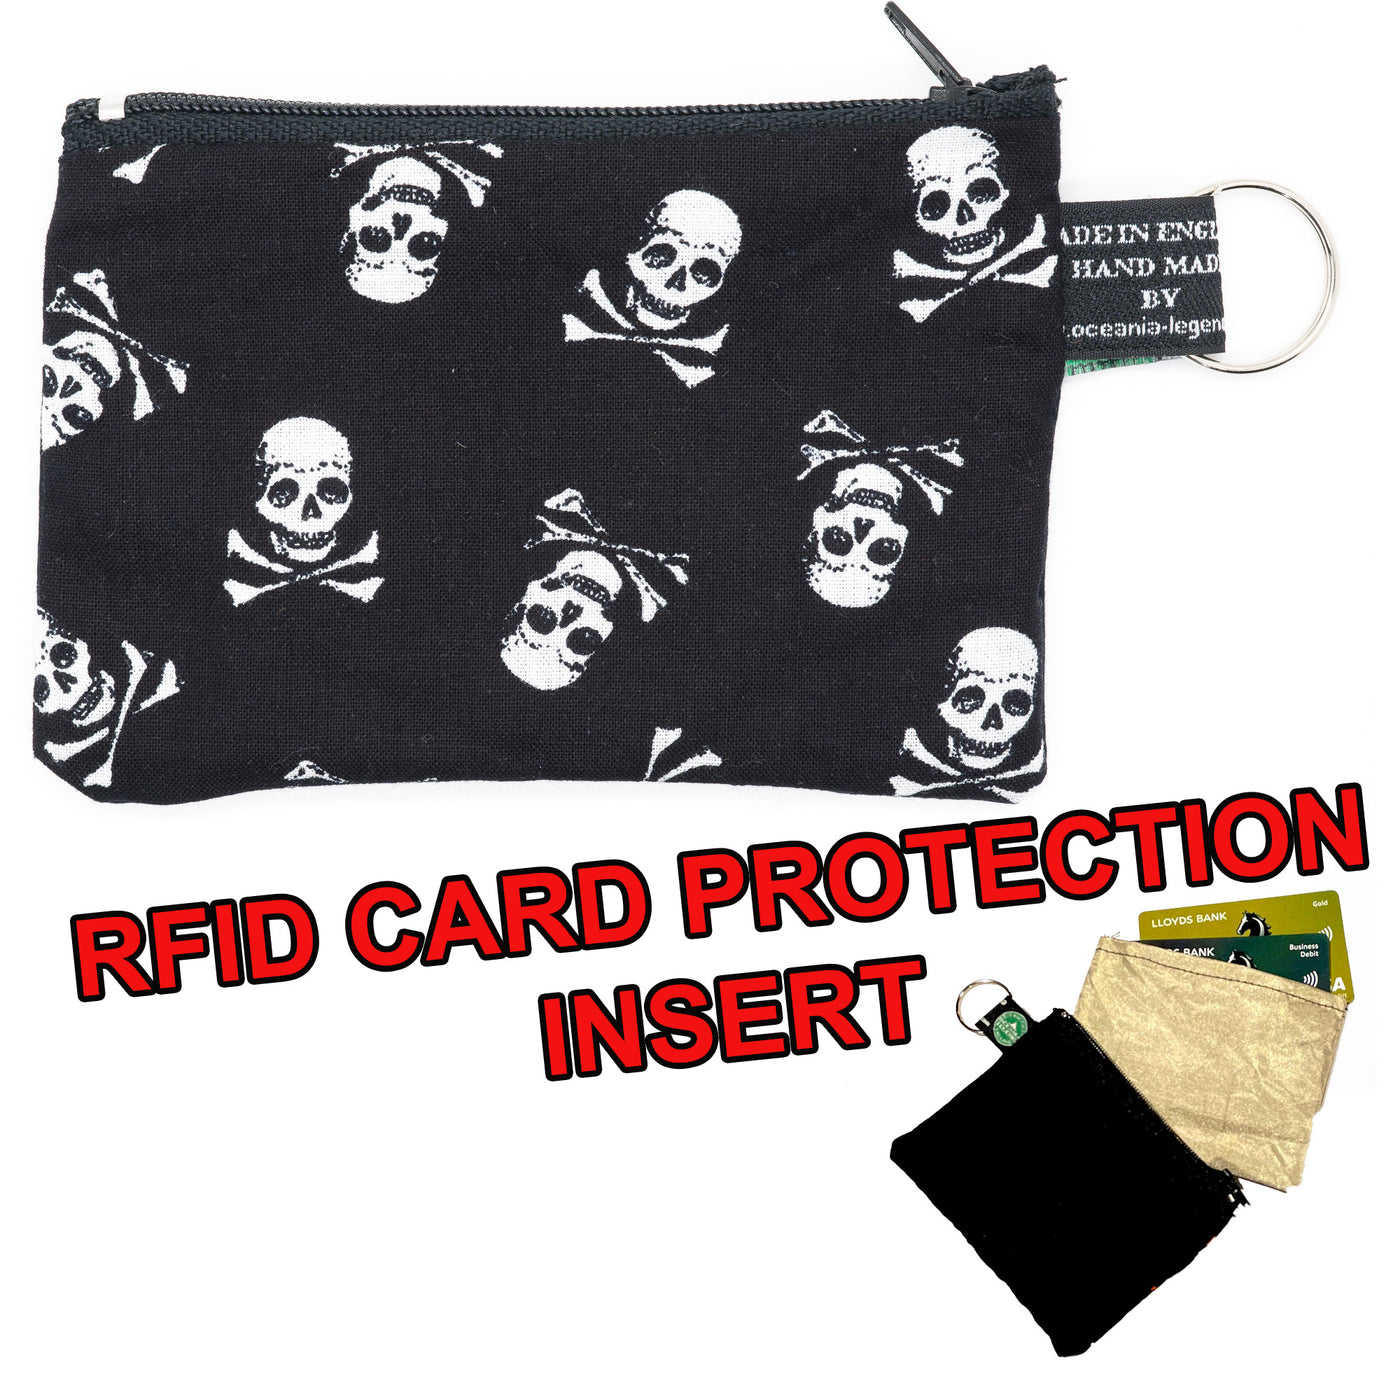 Skull & Crossbones cotton zipped coin & card purse with RFID card blocker